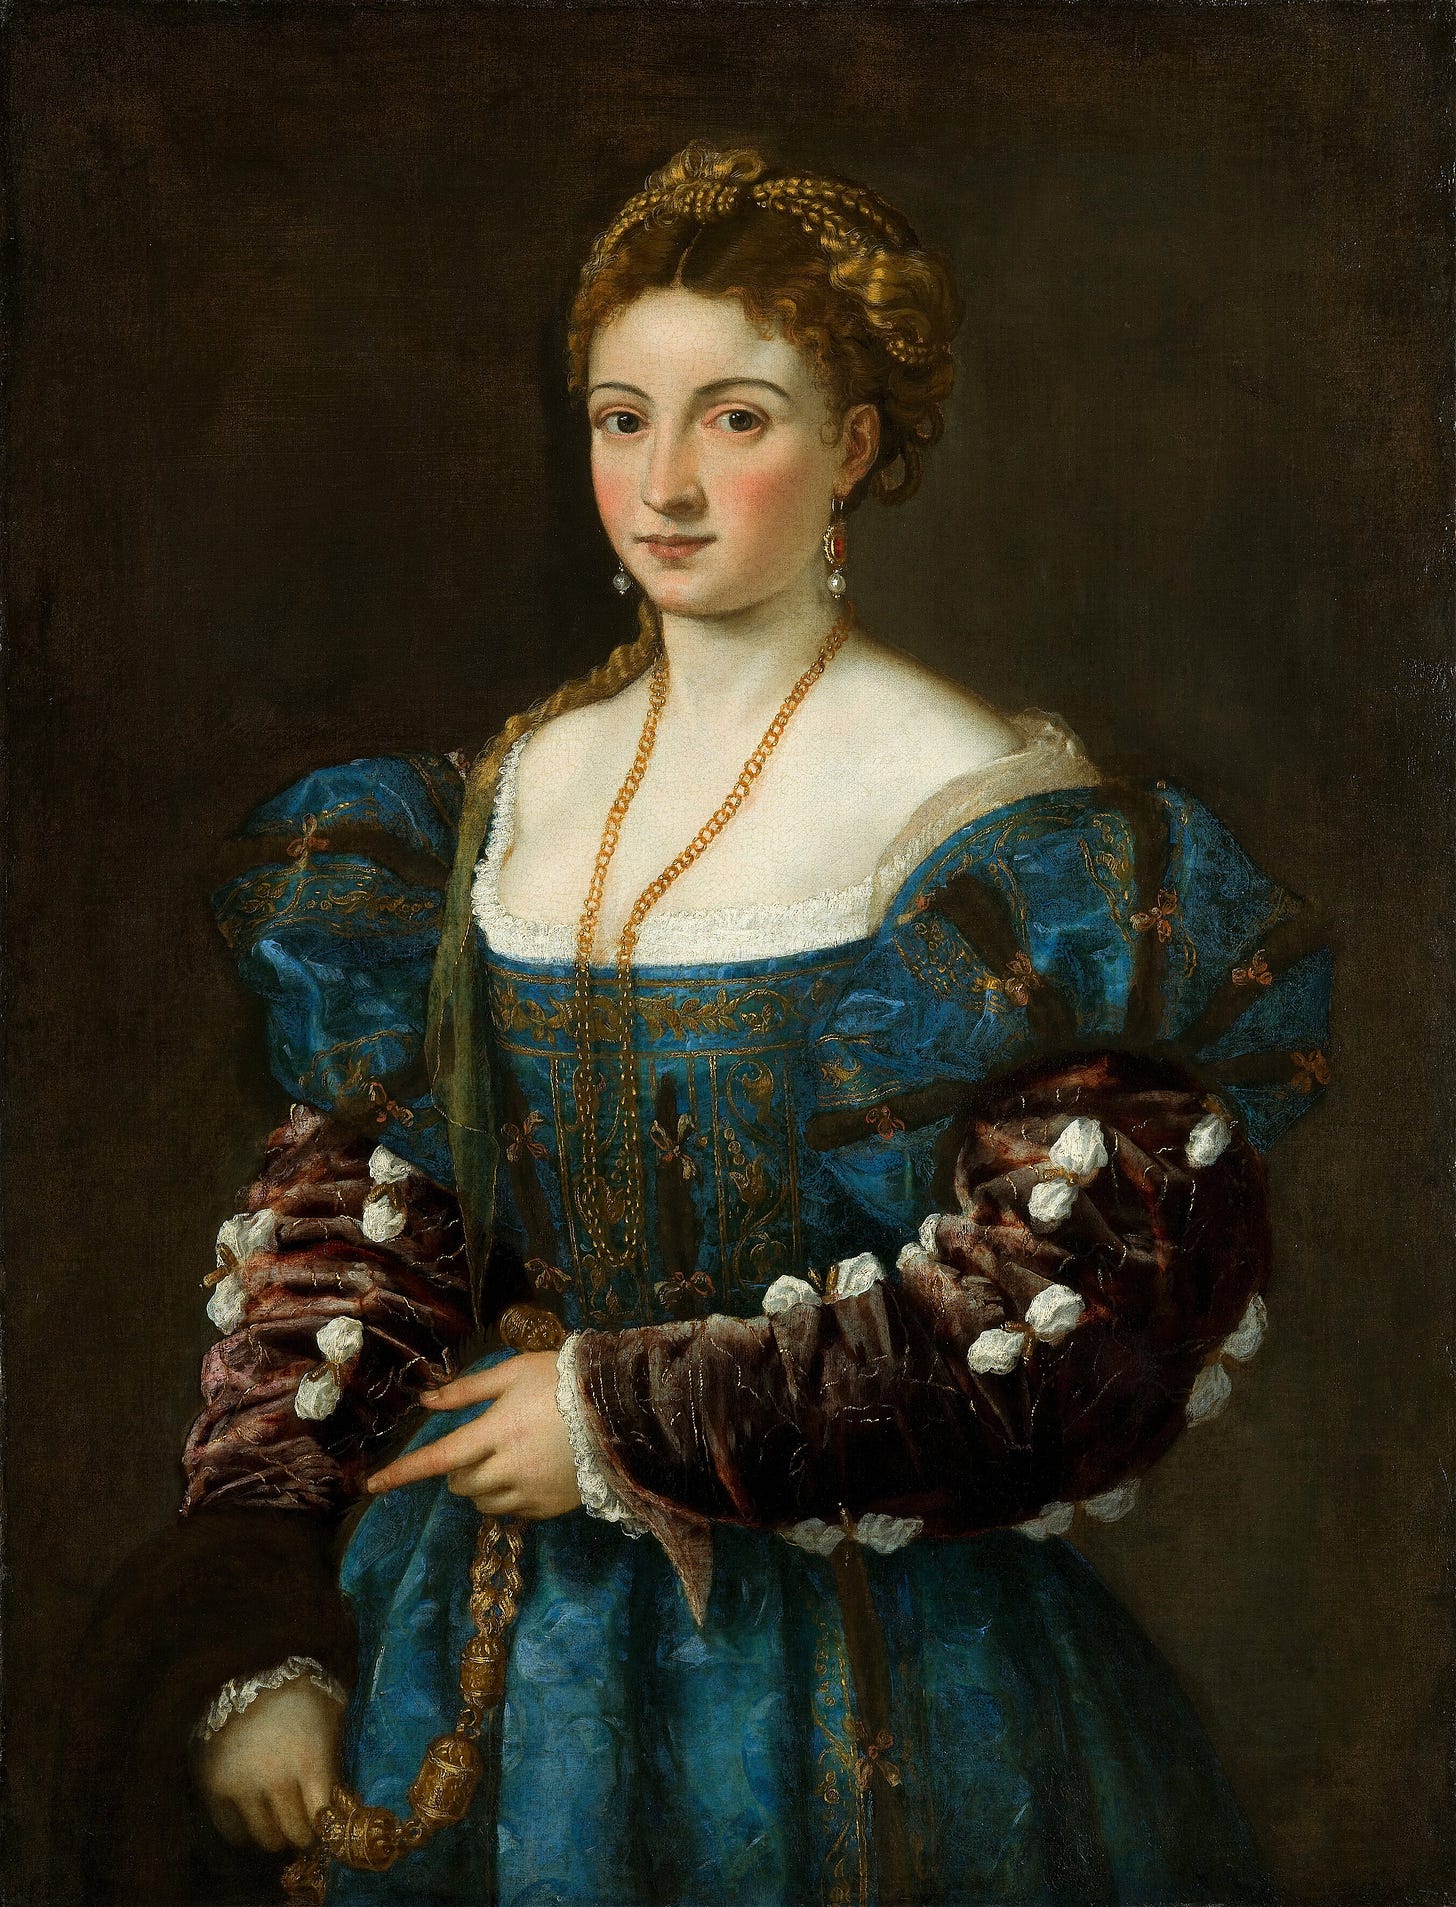 Portrait of a Lady (La Bella) (1536-1538)